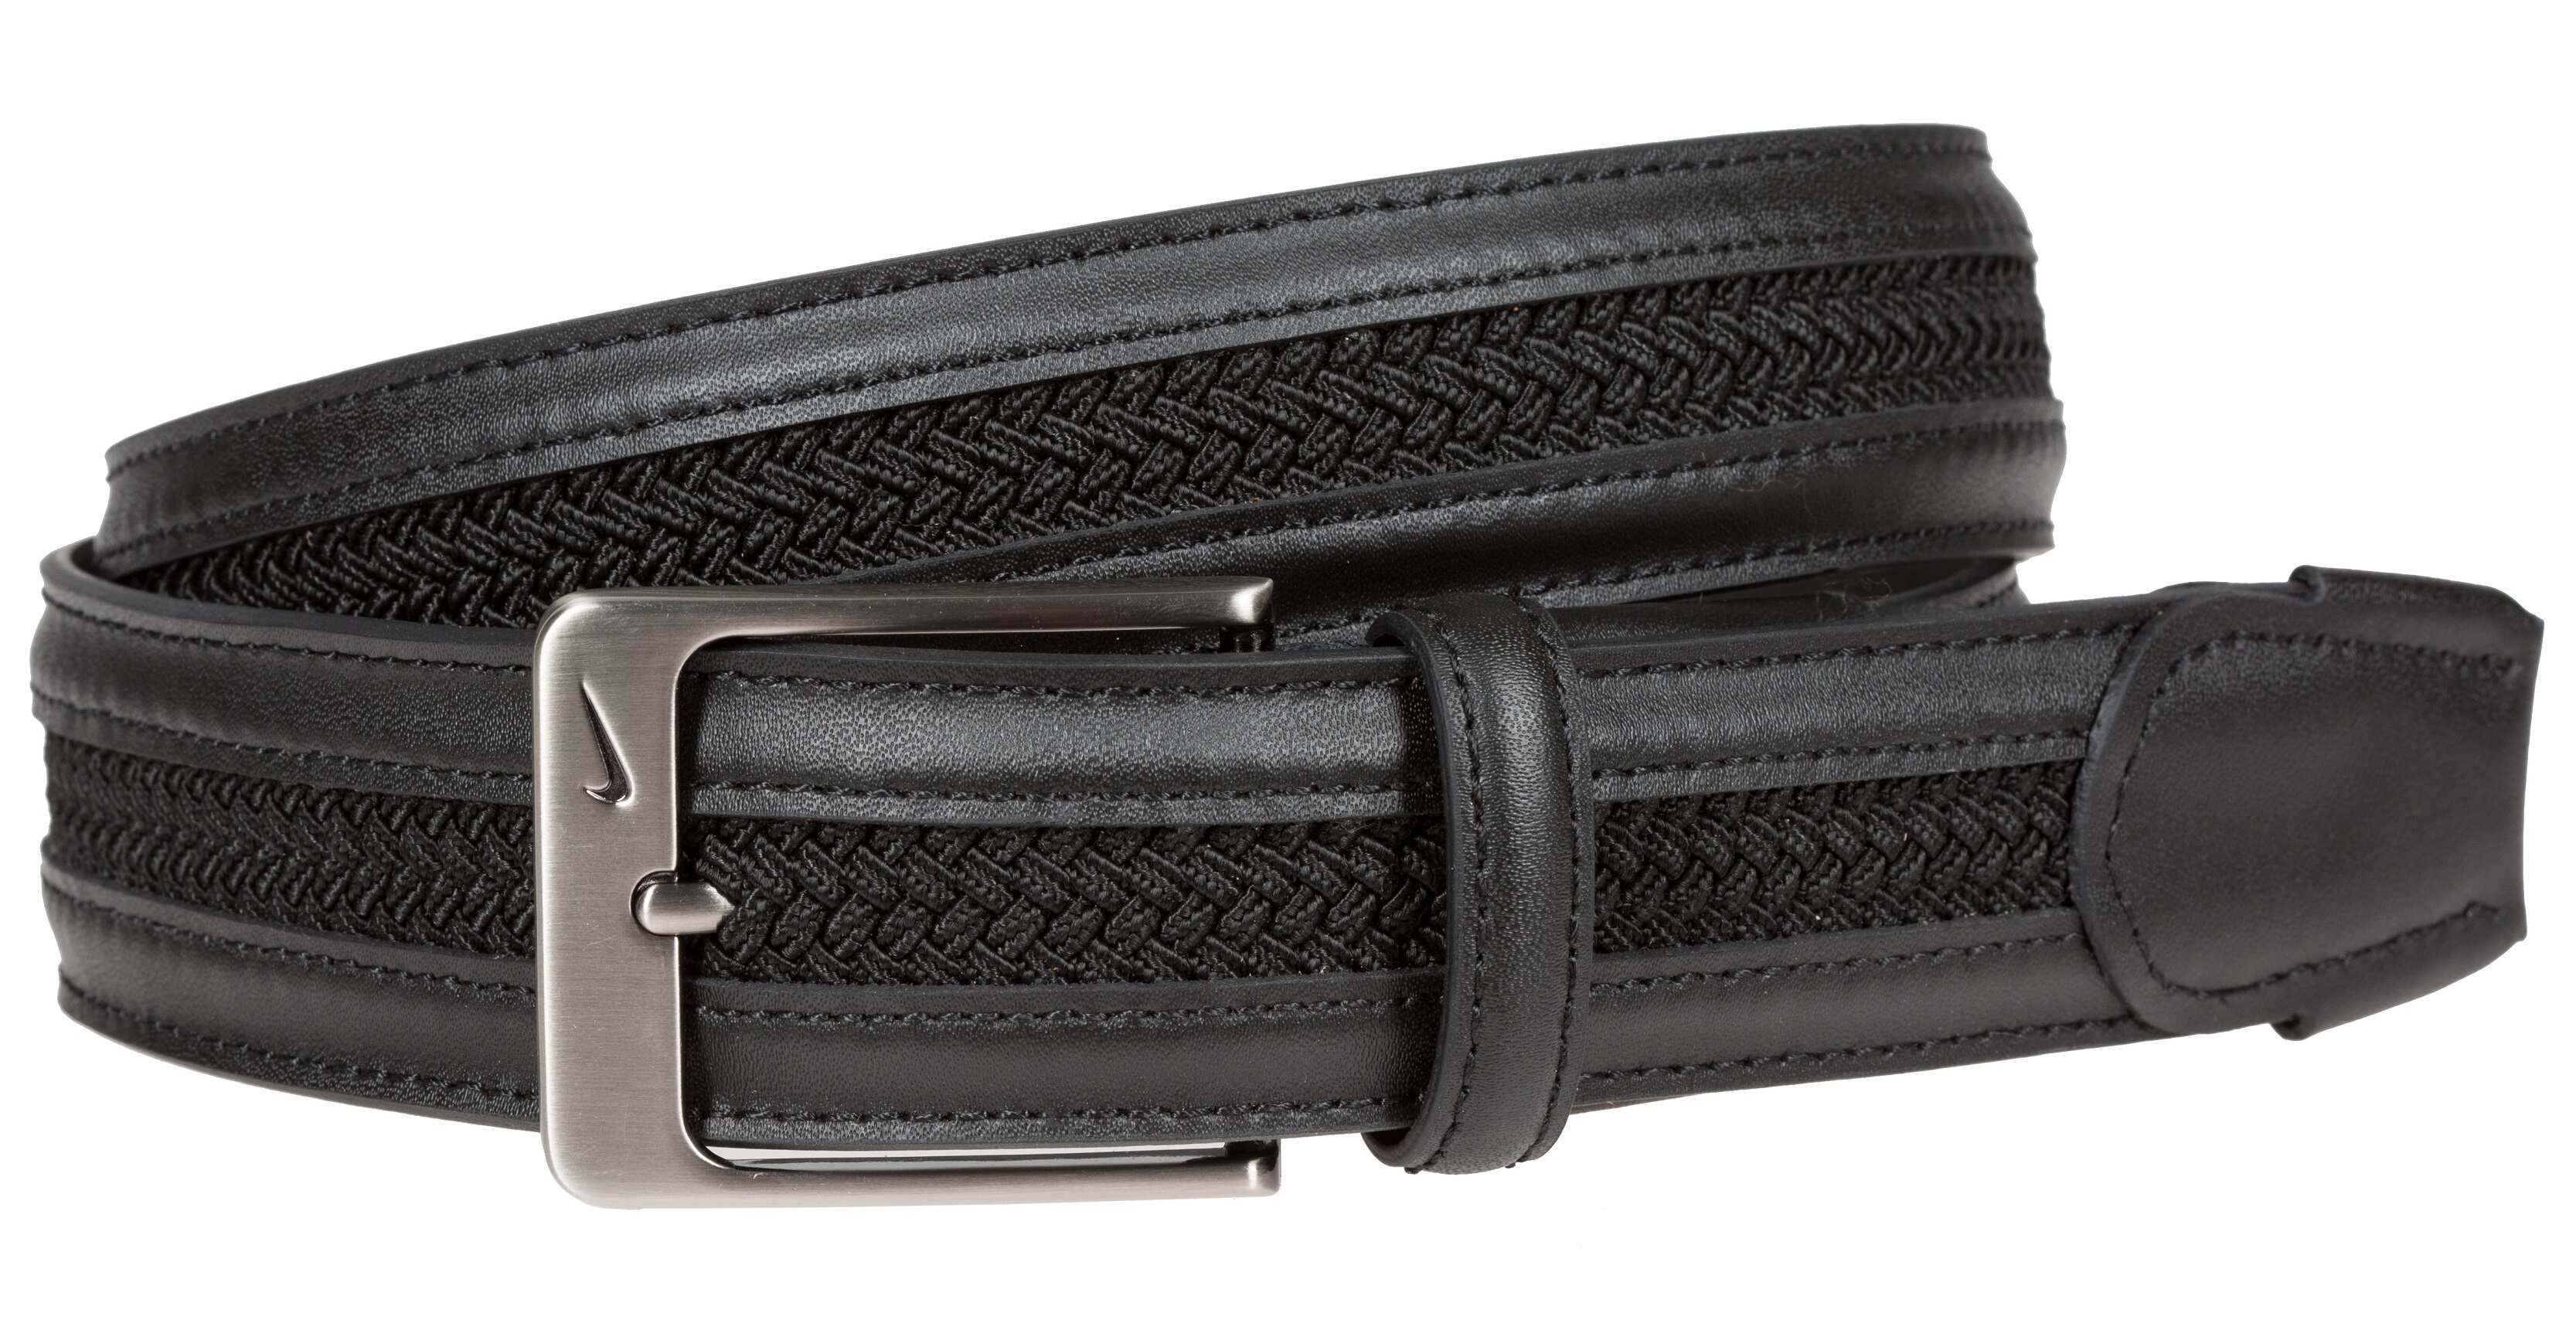 Nike Golf TW Leather Woven G-Flex Belt 